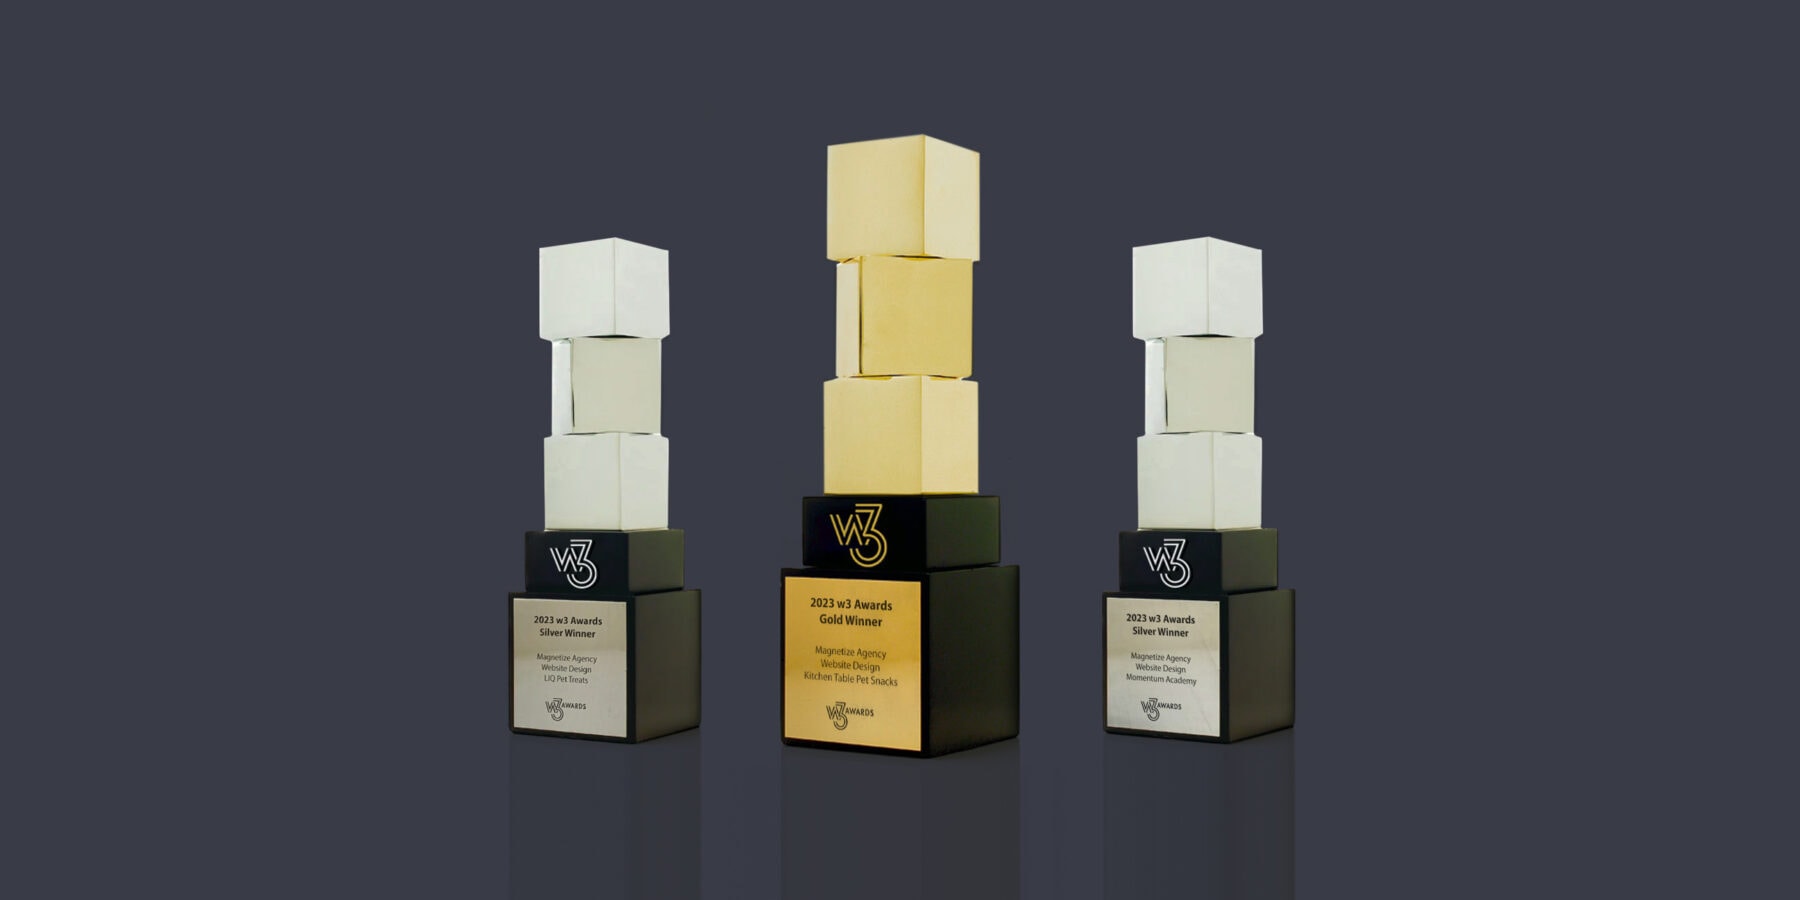 Magnetize wins three prestigious w3 Awards for website design